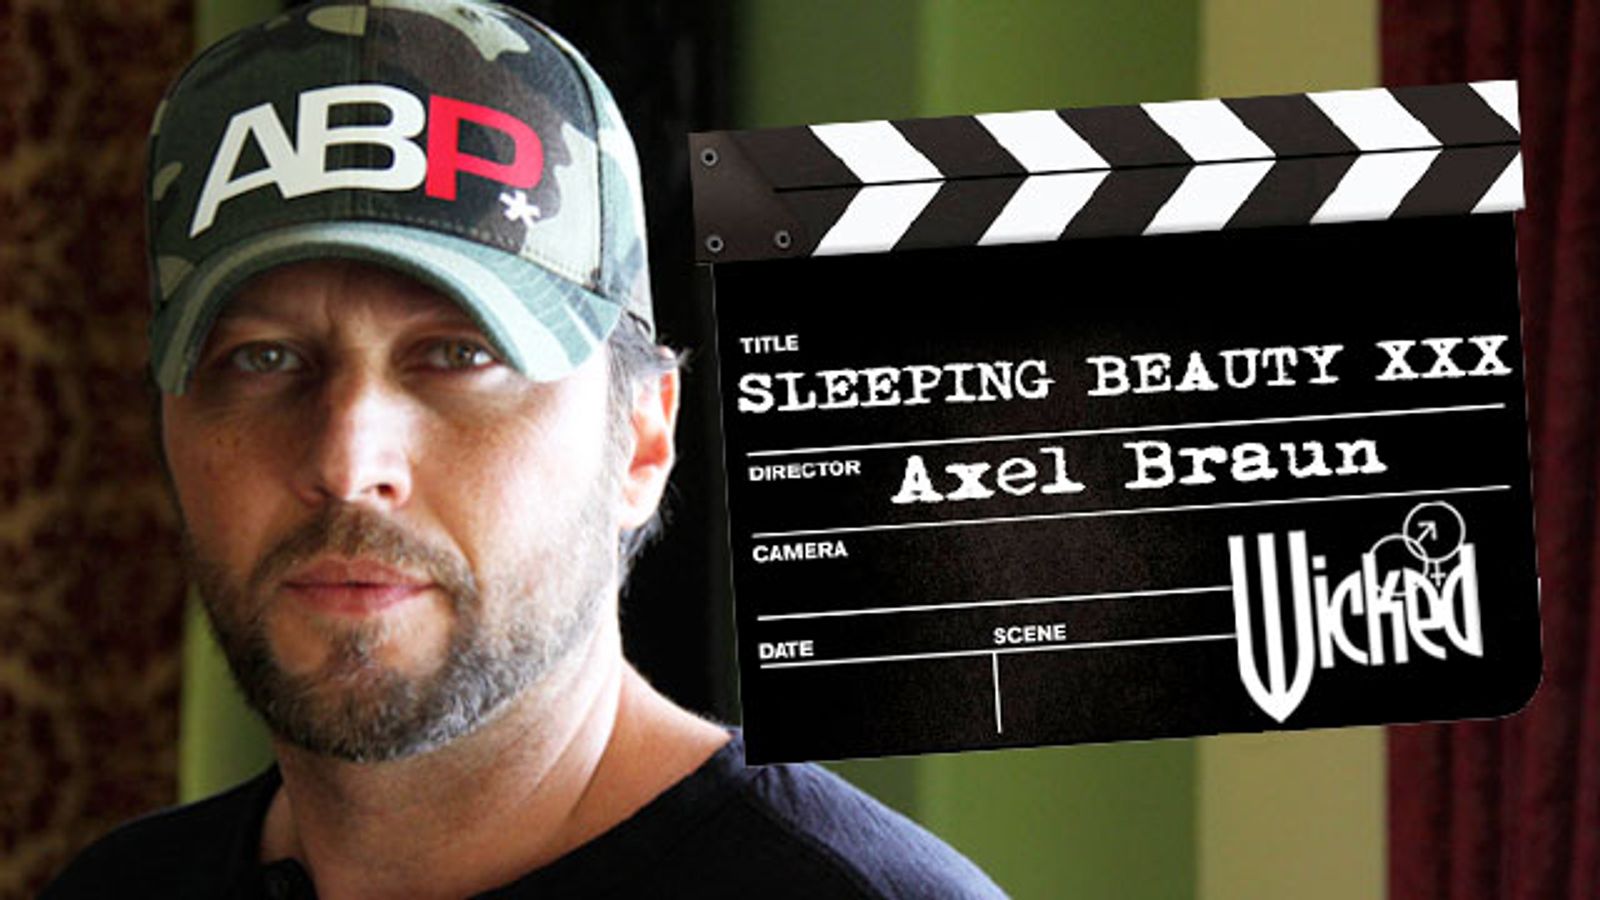 Axel Braun to Hold 'Sleeping Beauty' Casting Call Sunday